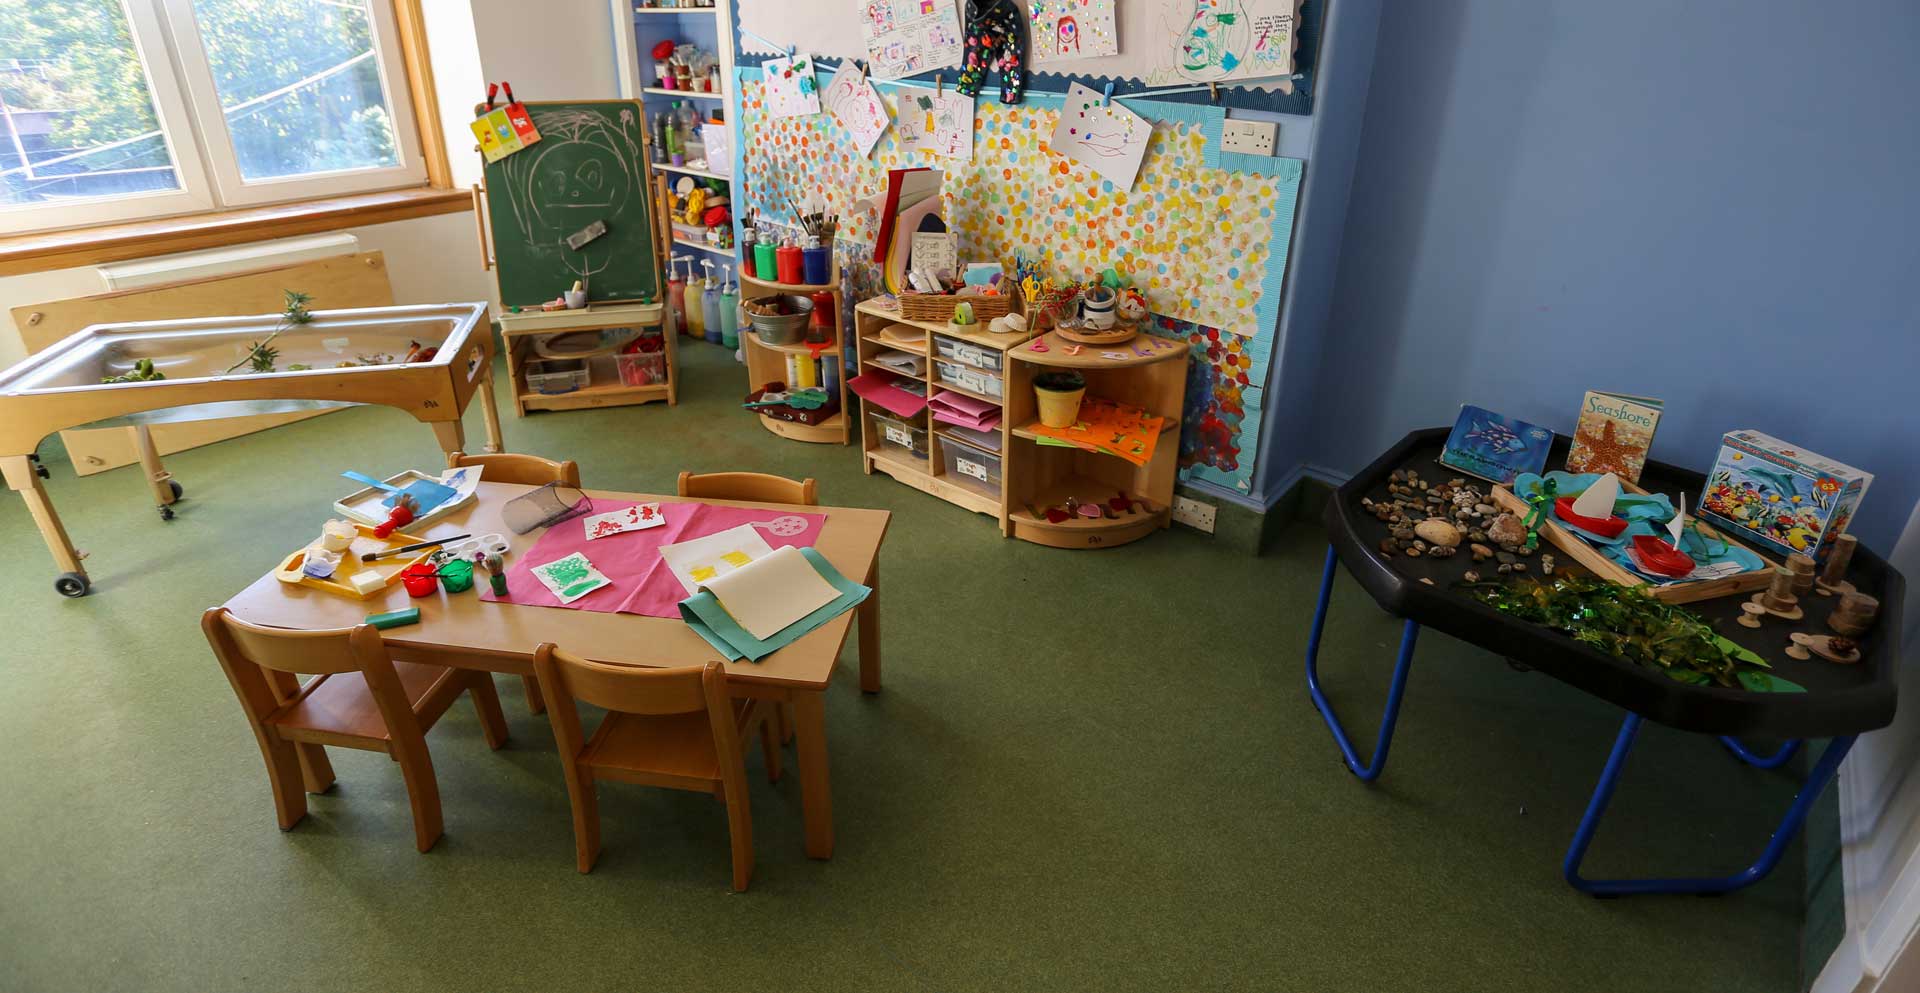 44 St Swithin Nursery Room Preschool